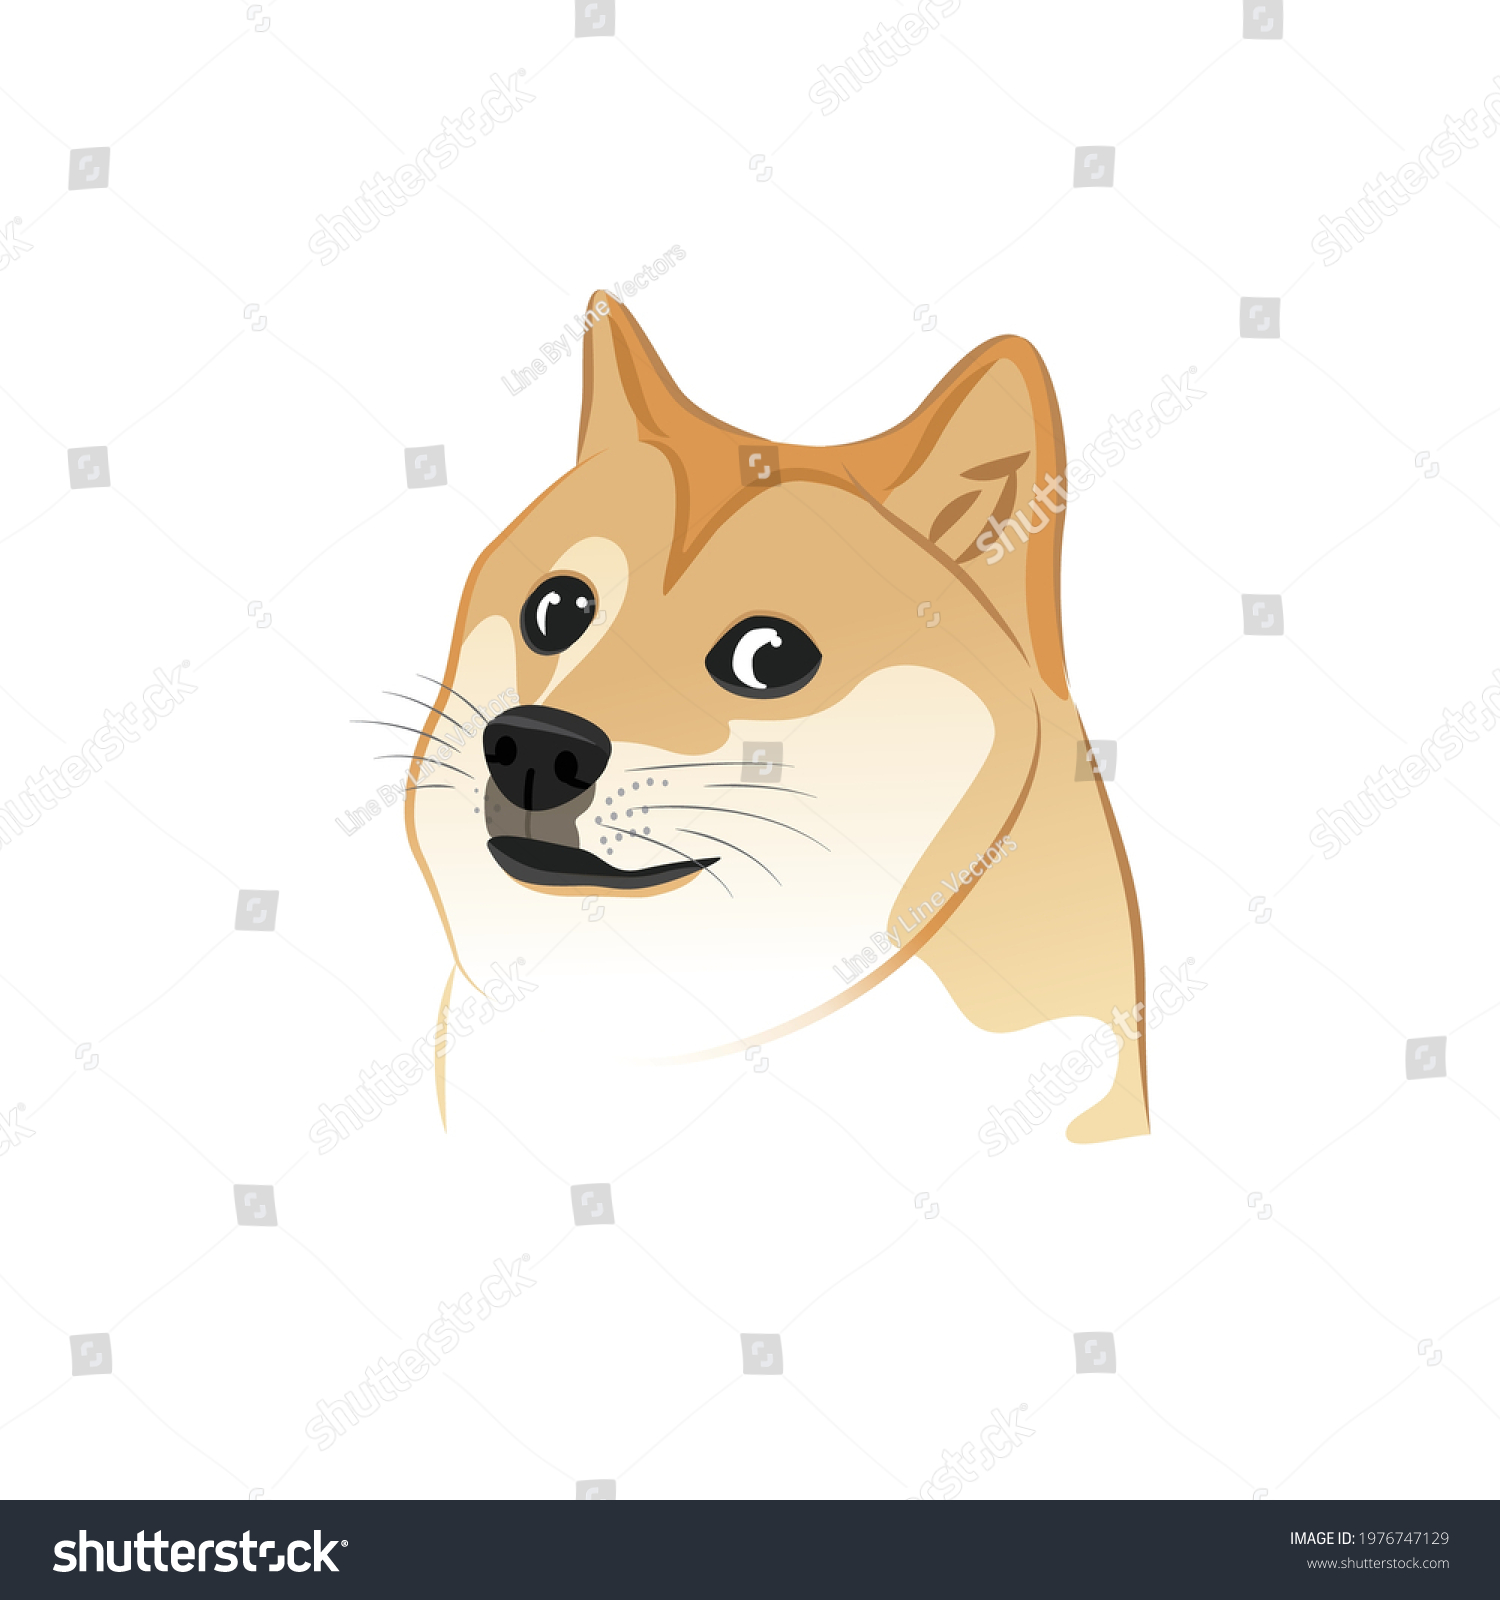 SVG of Meme Dog, Dogecoin, DOGE Cryptocurrency, Viral Meme, To The Moon, Funny Dog, Dog Illustration, Dog Vector, Cute Puppy, Shiba Inu, Japanese Breed, Vector Illustration svg